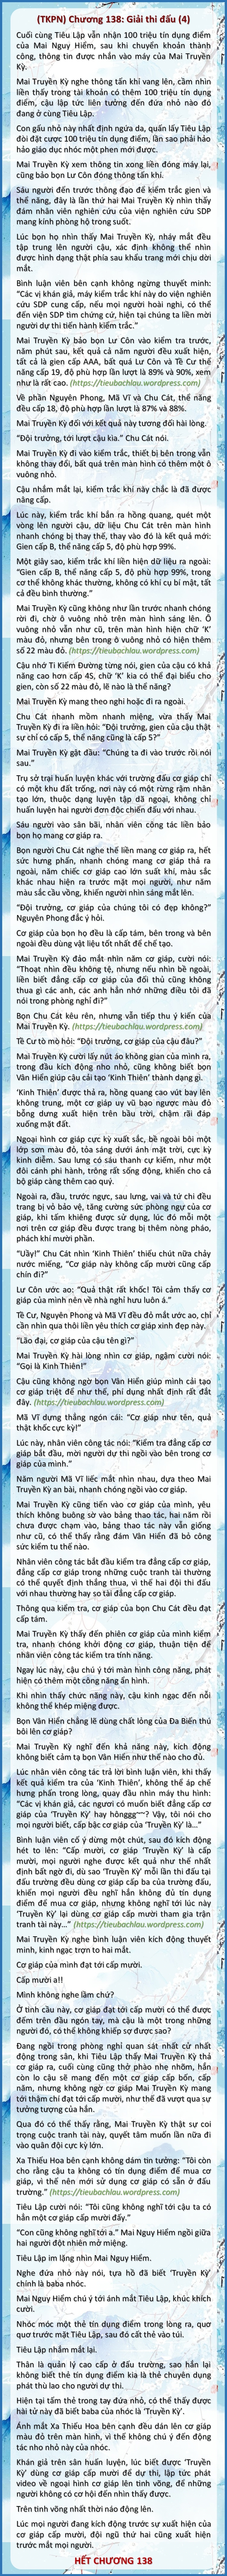 TKPN_C138a_Thosiunhon